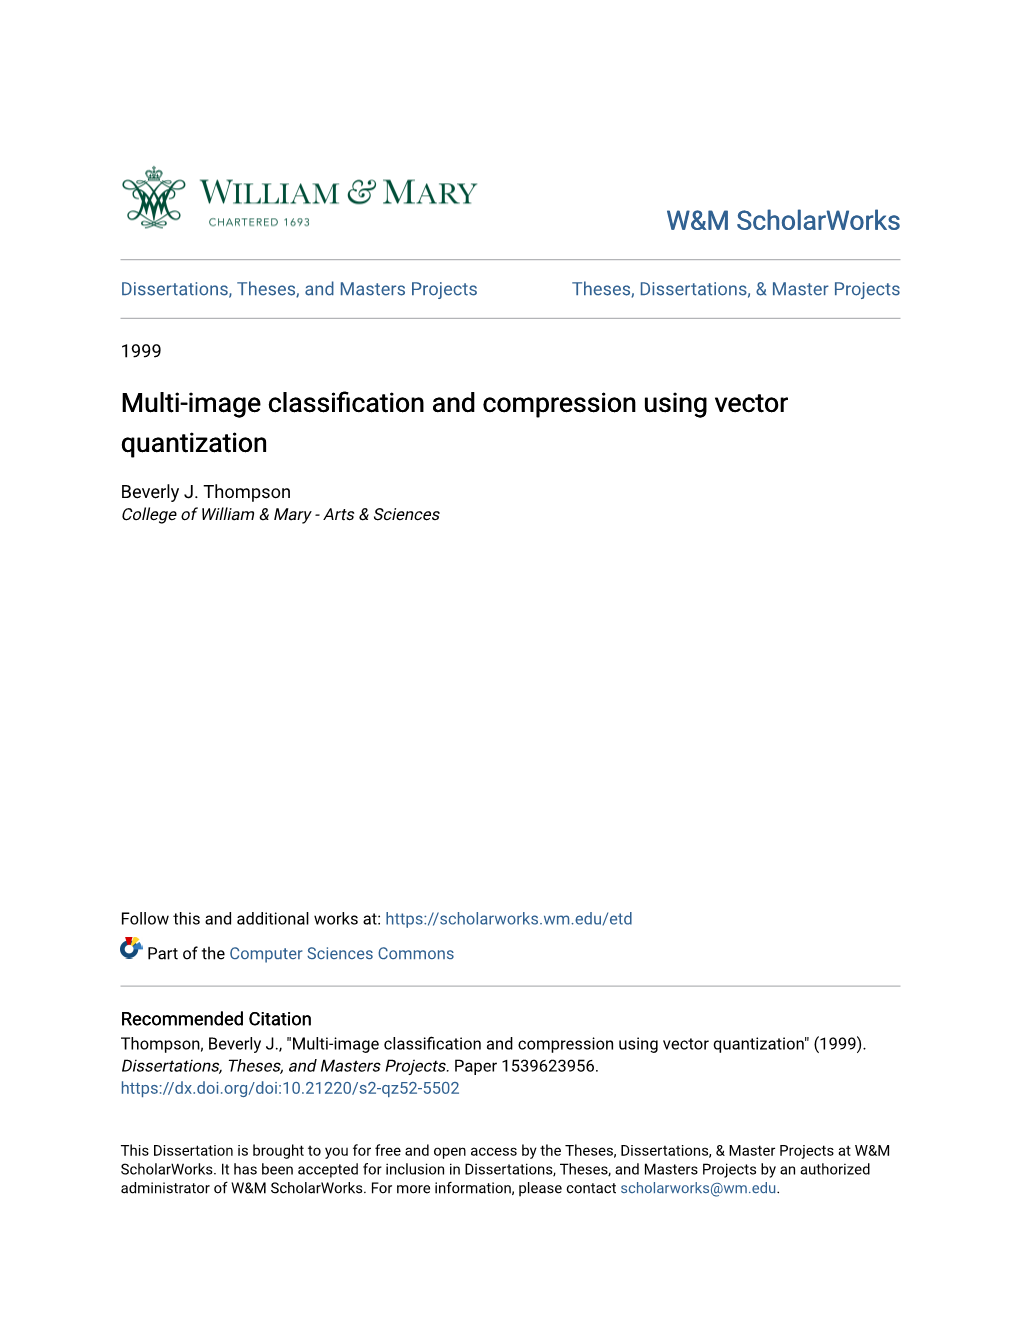 Multi-Image Classification and Compression Using Vector Quantization